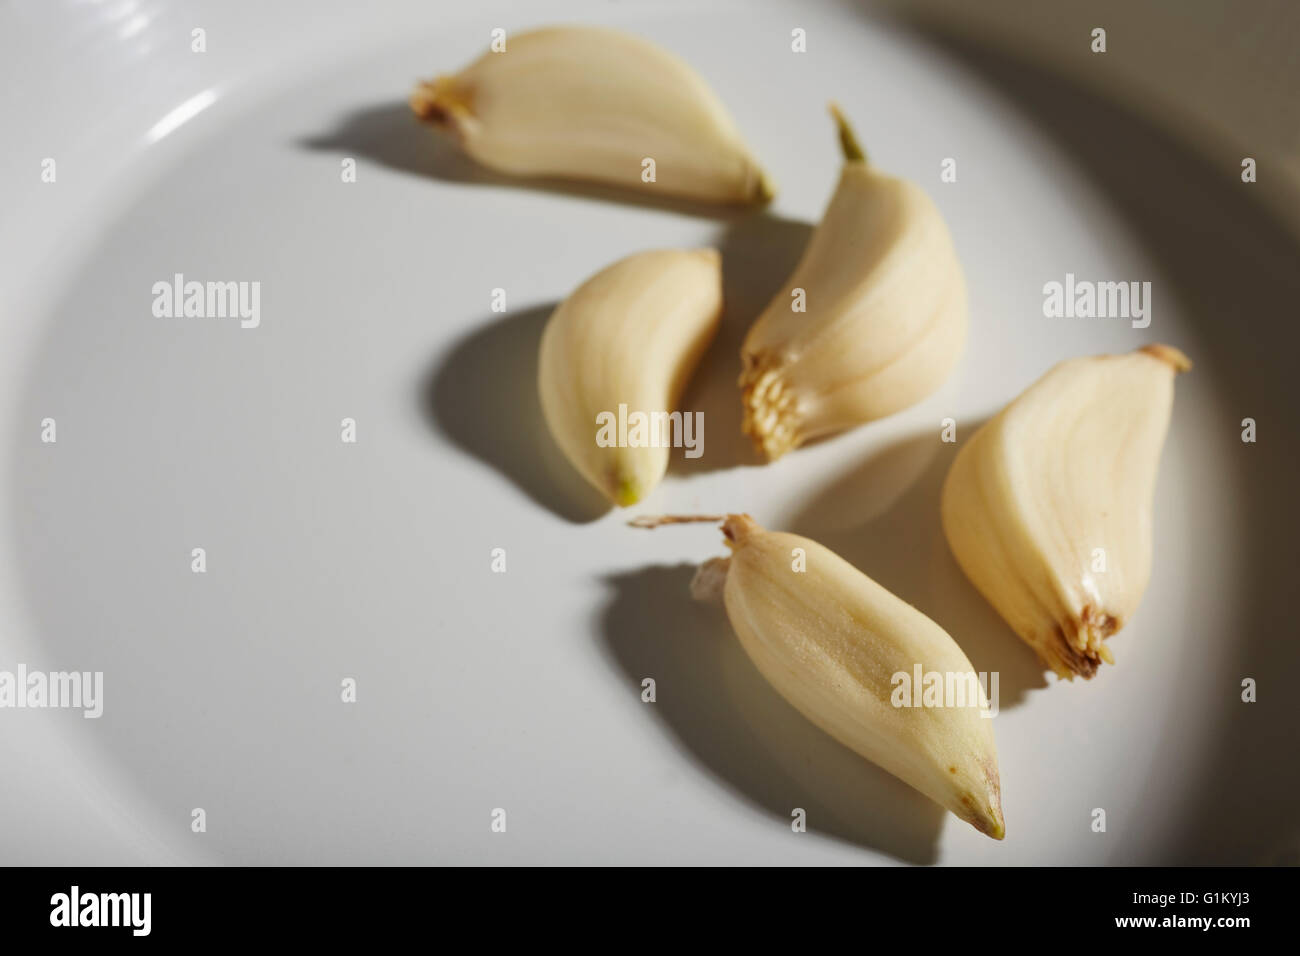 whole raw garlic cloves Stock Photo